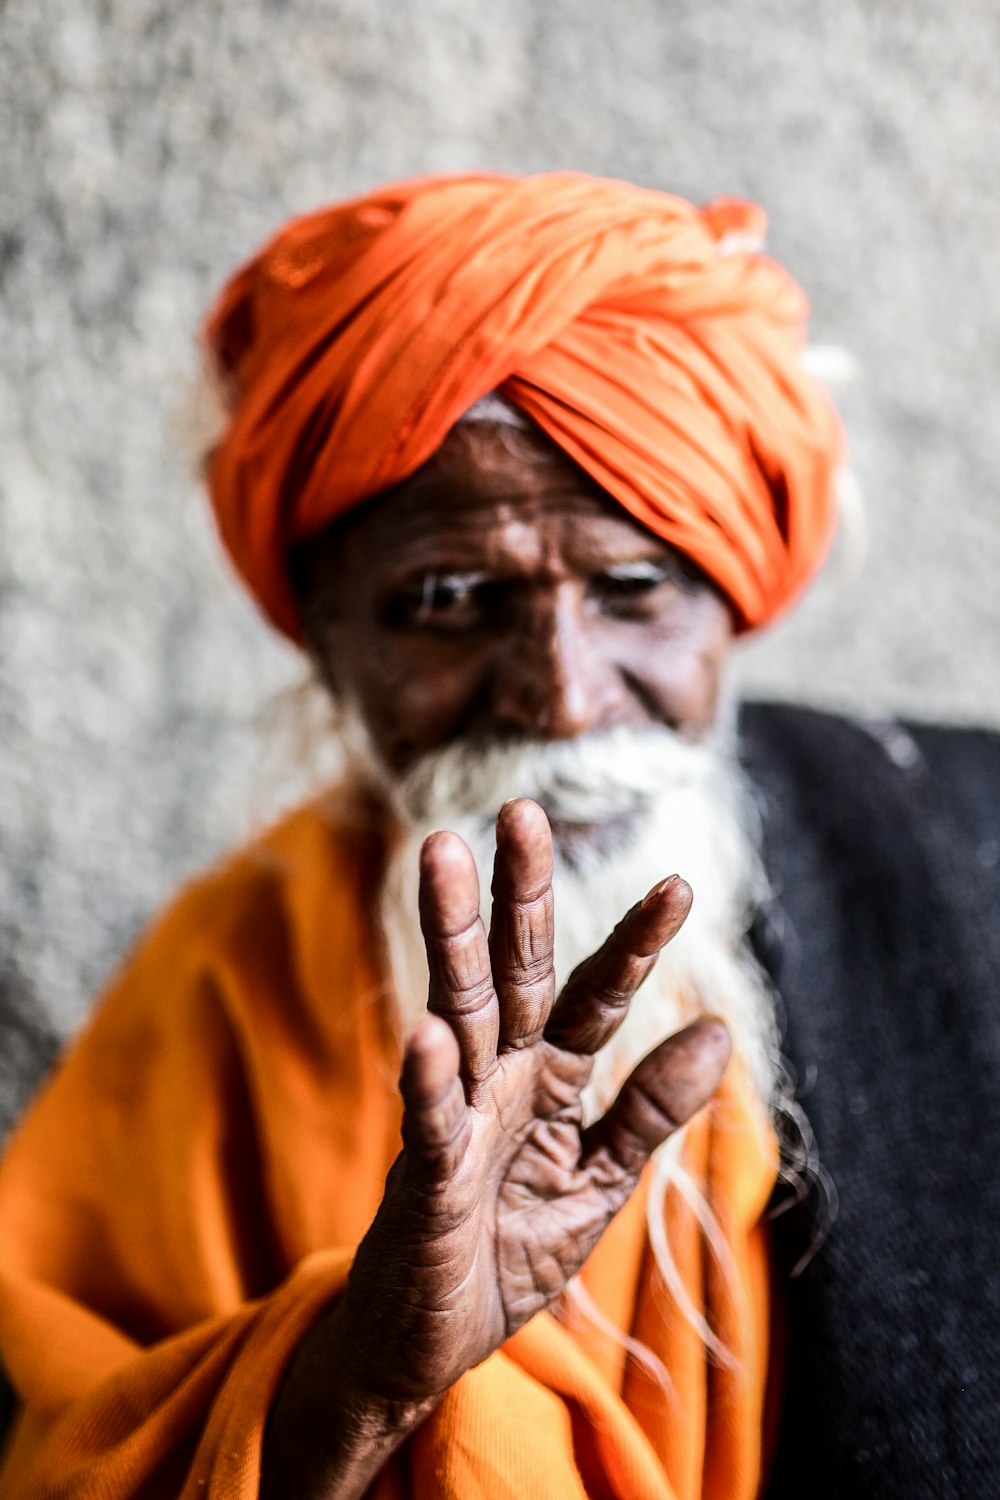 Mann mit orangefarbenem Turban